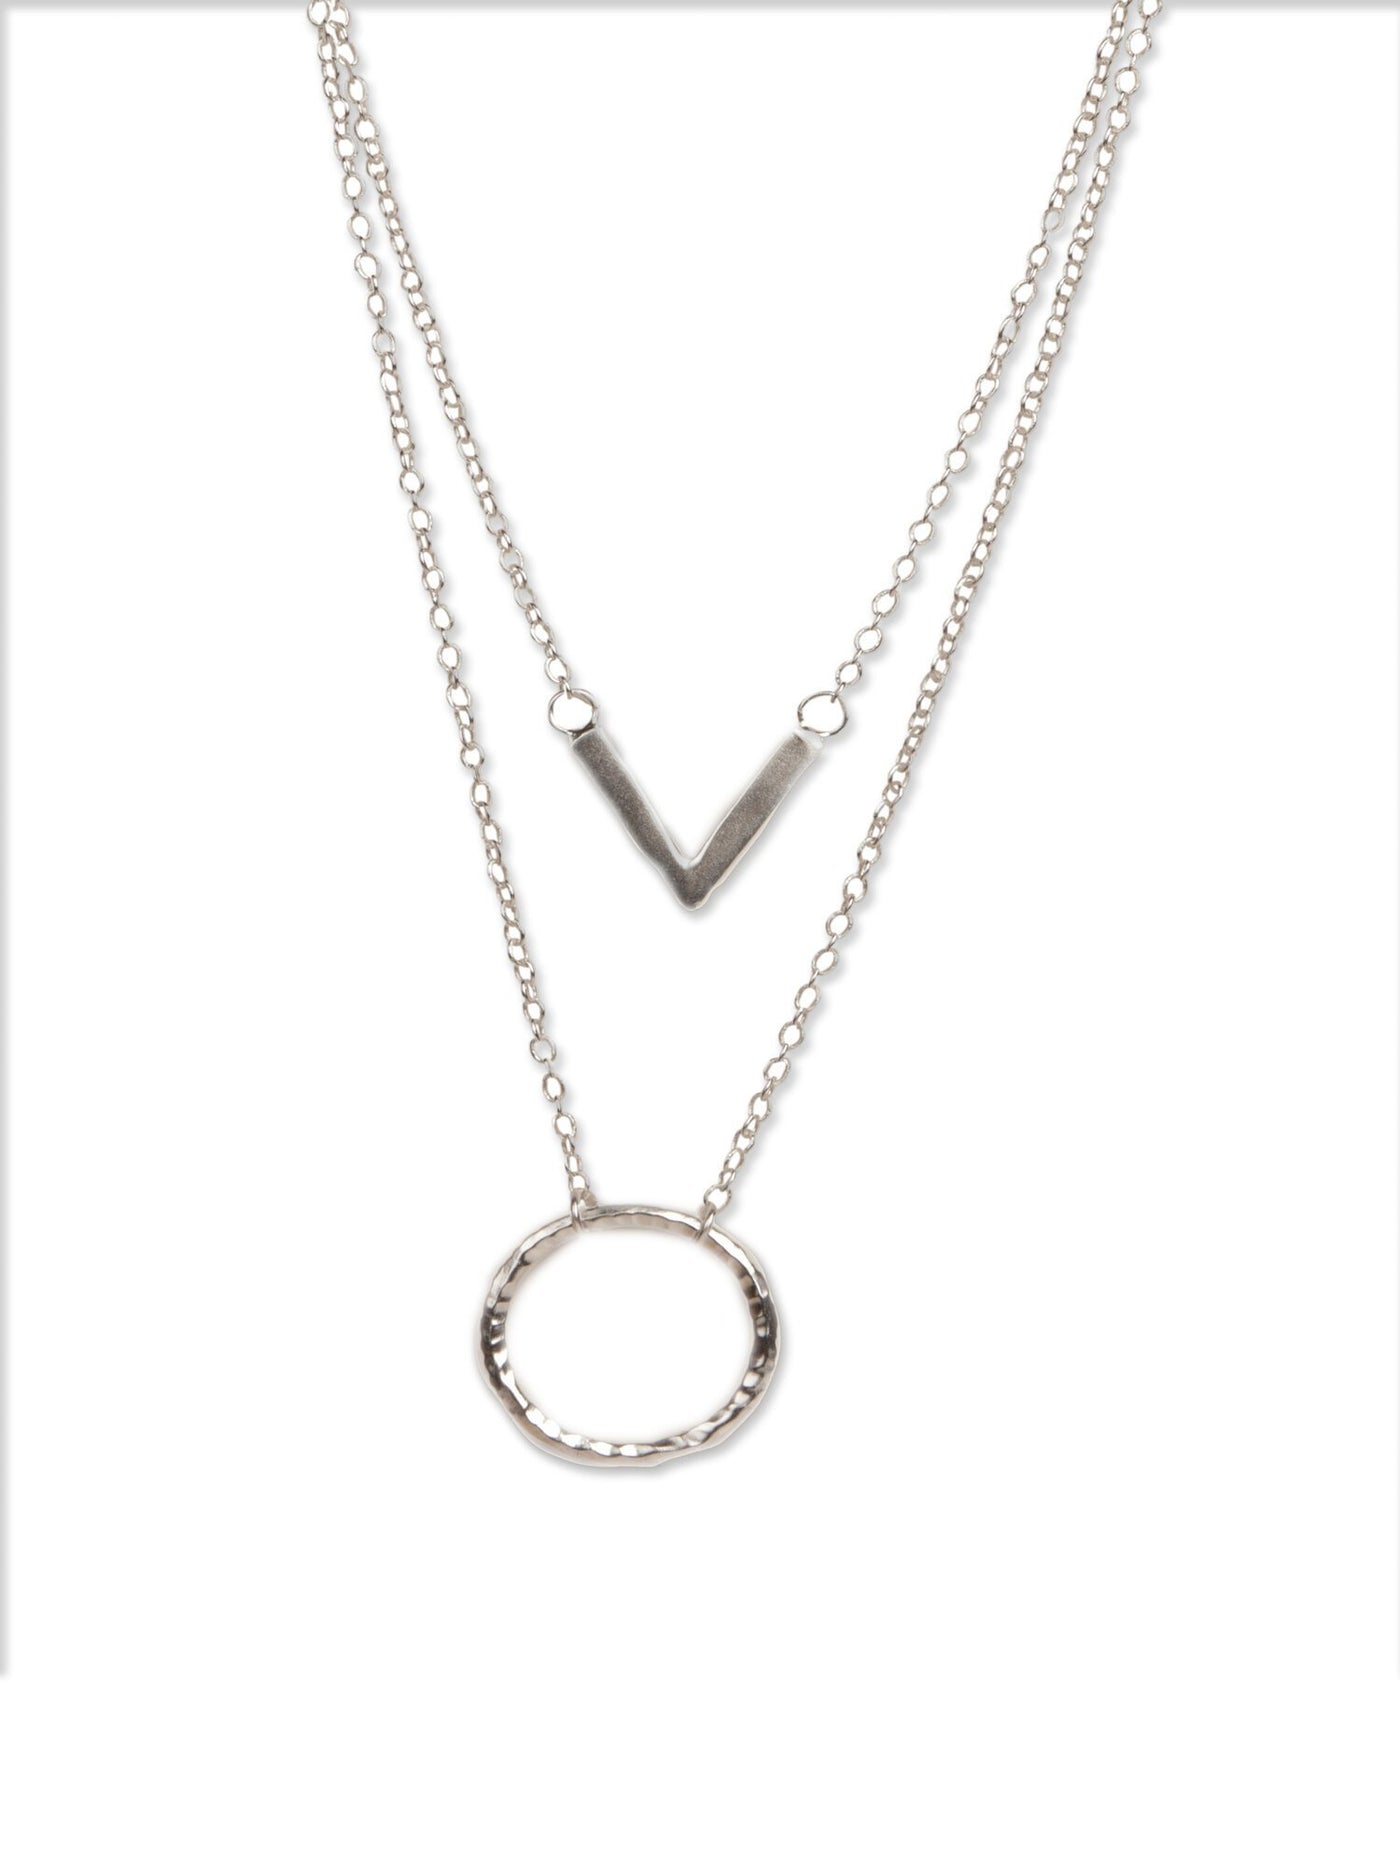 Evergreen Layered Silver Necklace - Stilskii